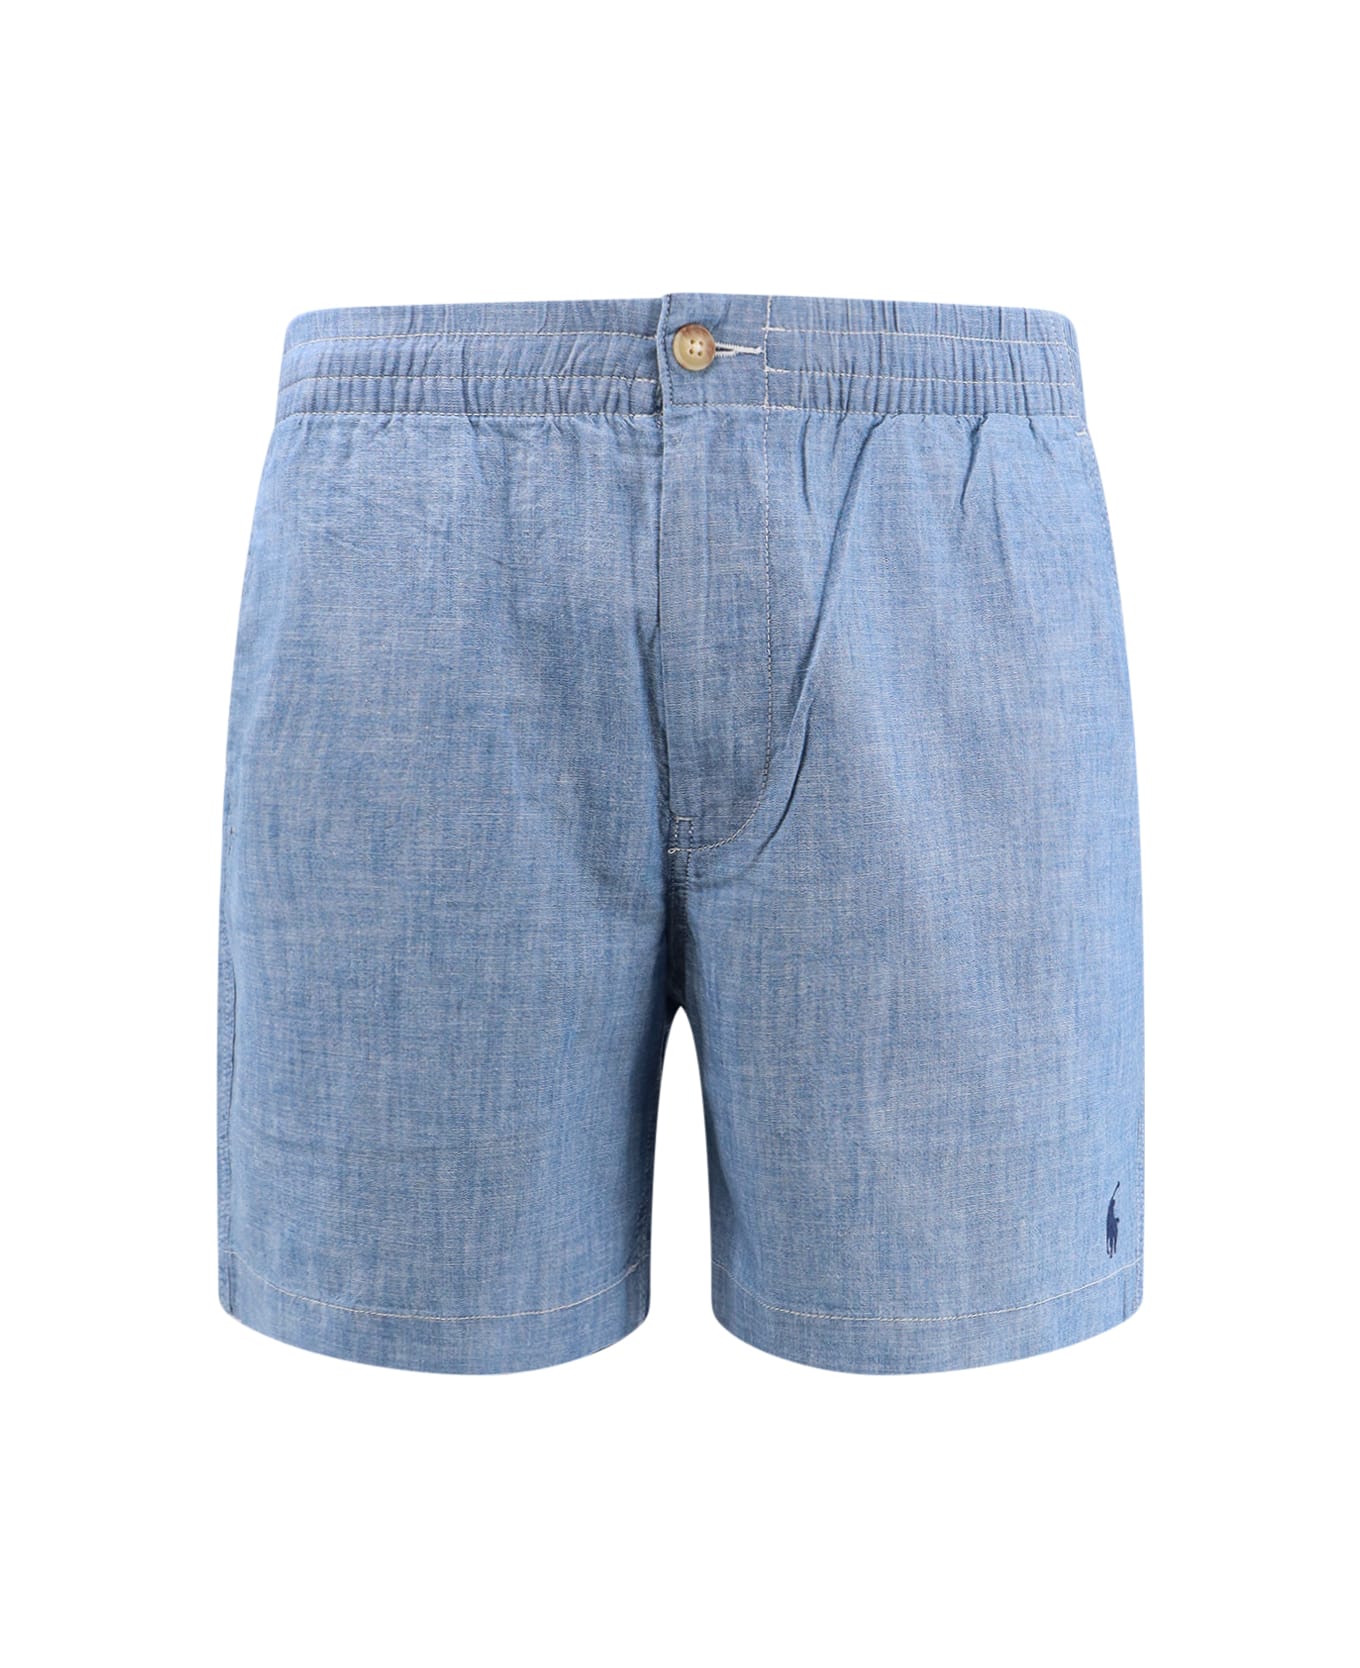 Polo Ralph Lauren Bermuda Shorts - Blue